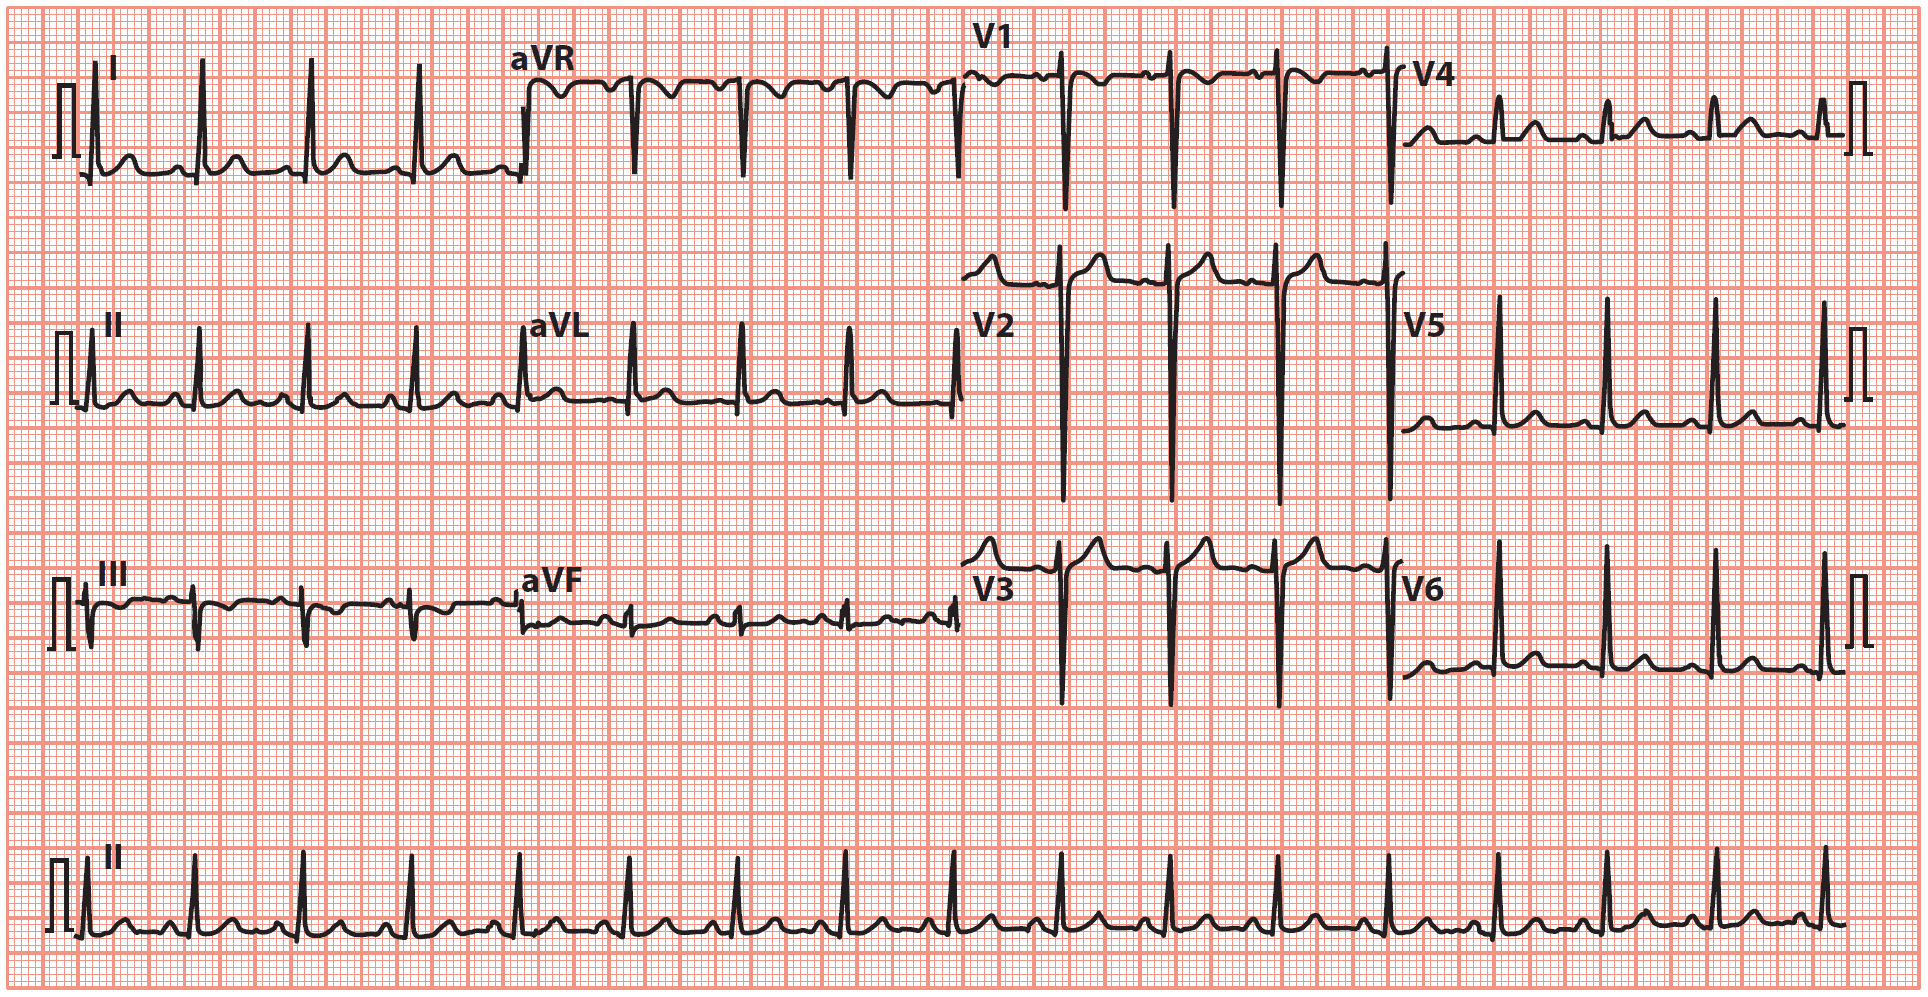 ECG of Left ventricular hypertrophy (LVH) with tall R waves in leads I, aVL, V5, V6, and deep S waves in leads V1, V2 and V3